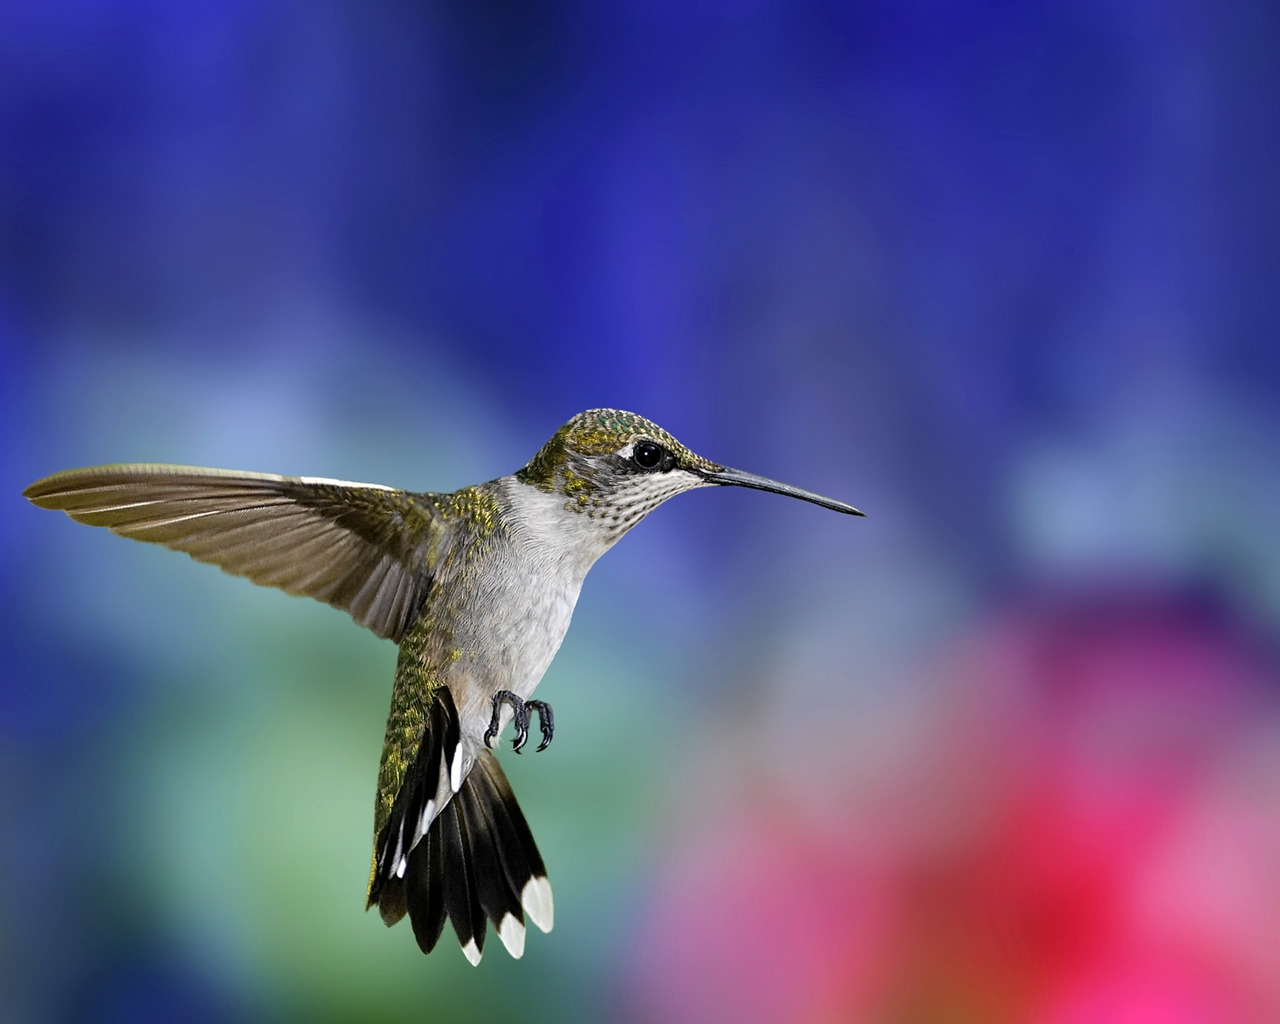 Colibri Bird for 1280 x 1024 resolution